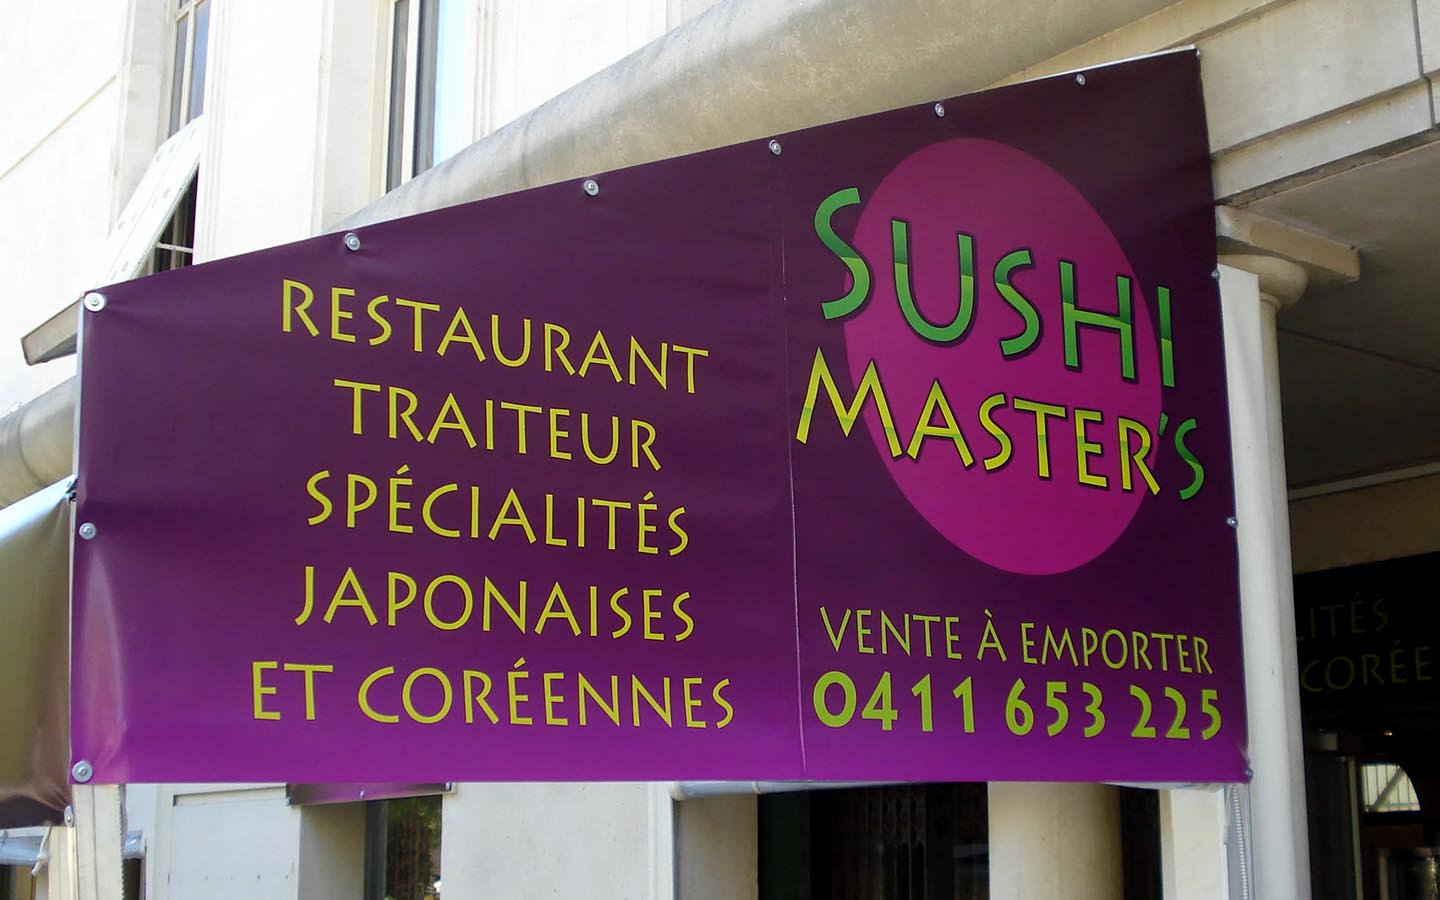 Bâche Sushi Master